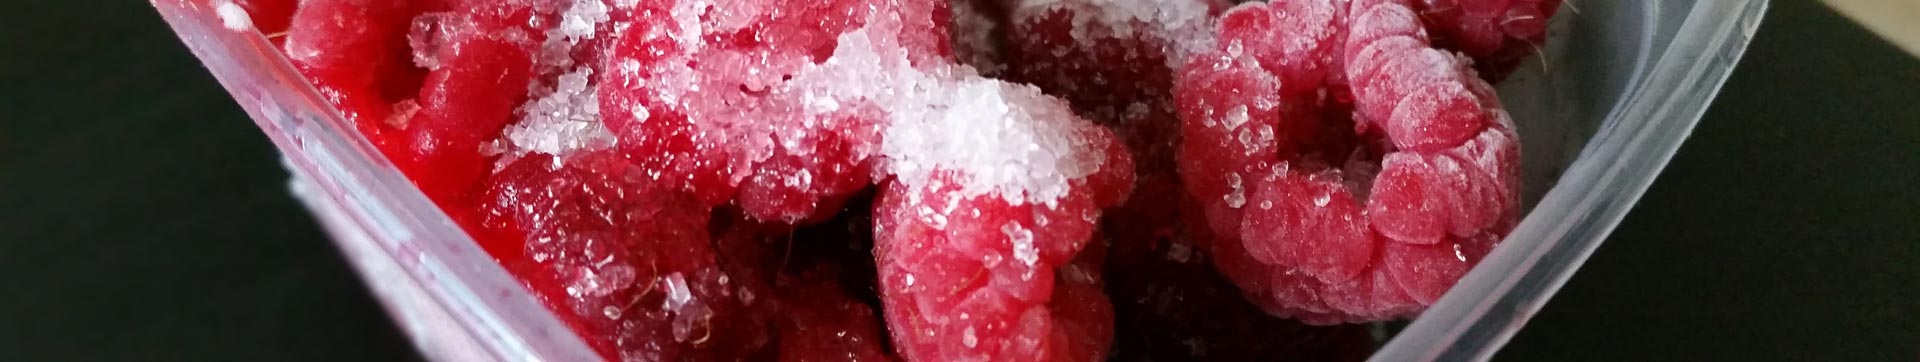 Frozen Fruits Color Sorter